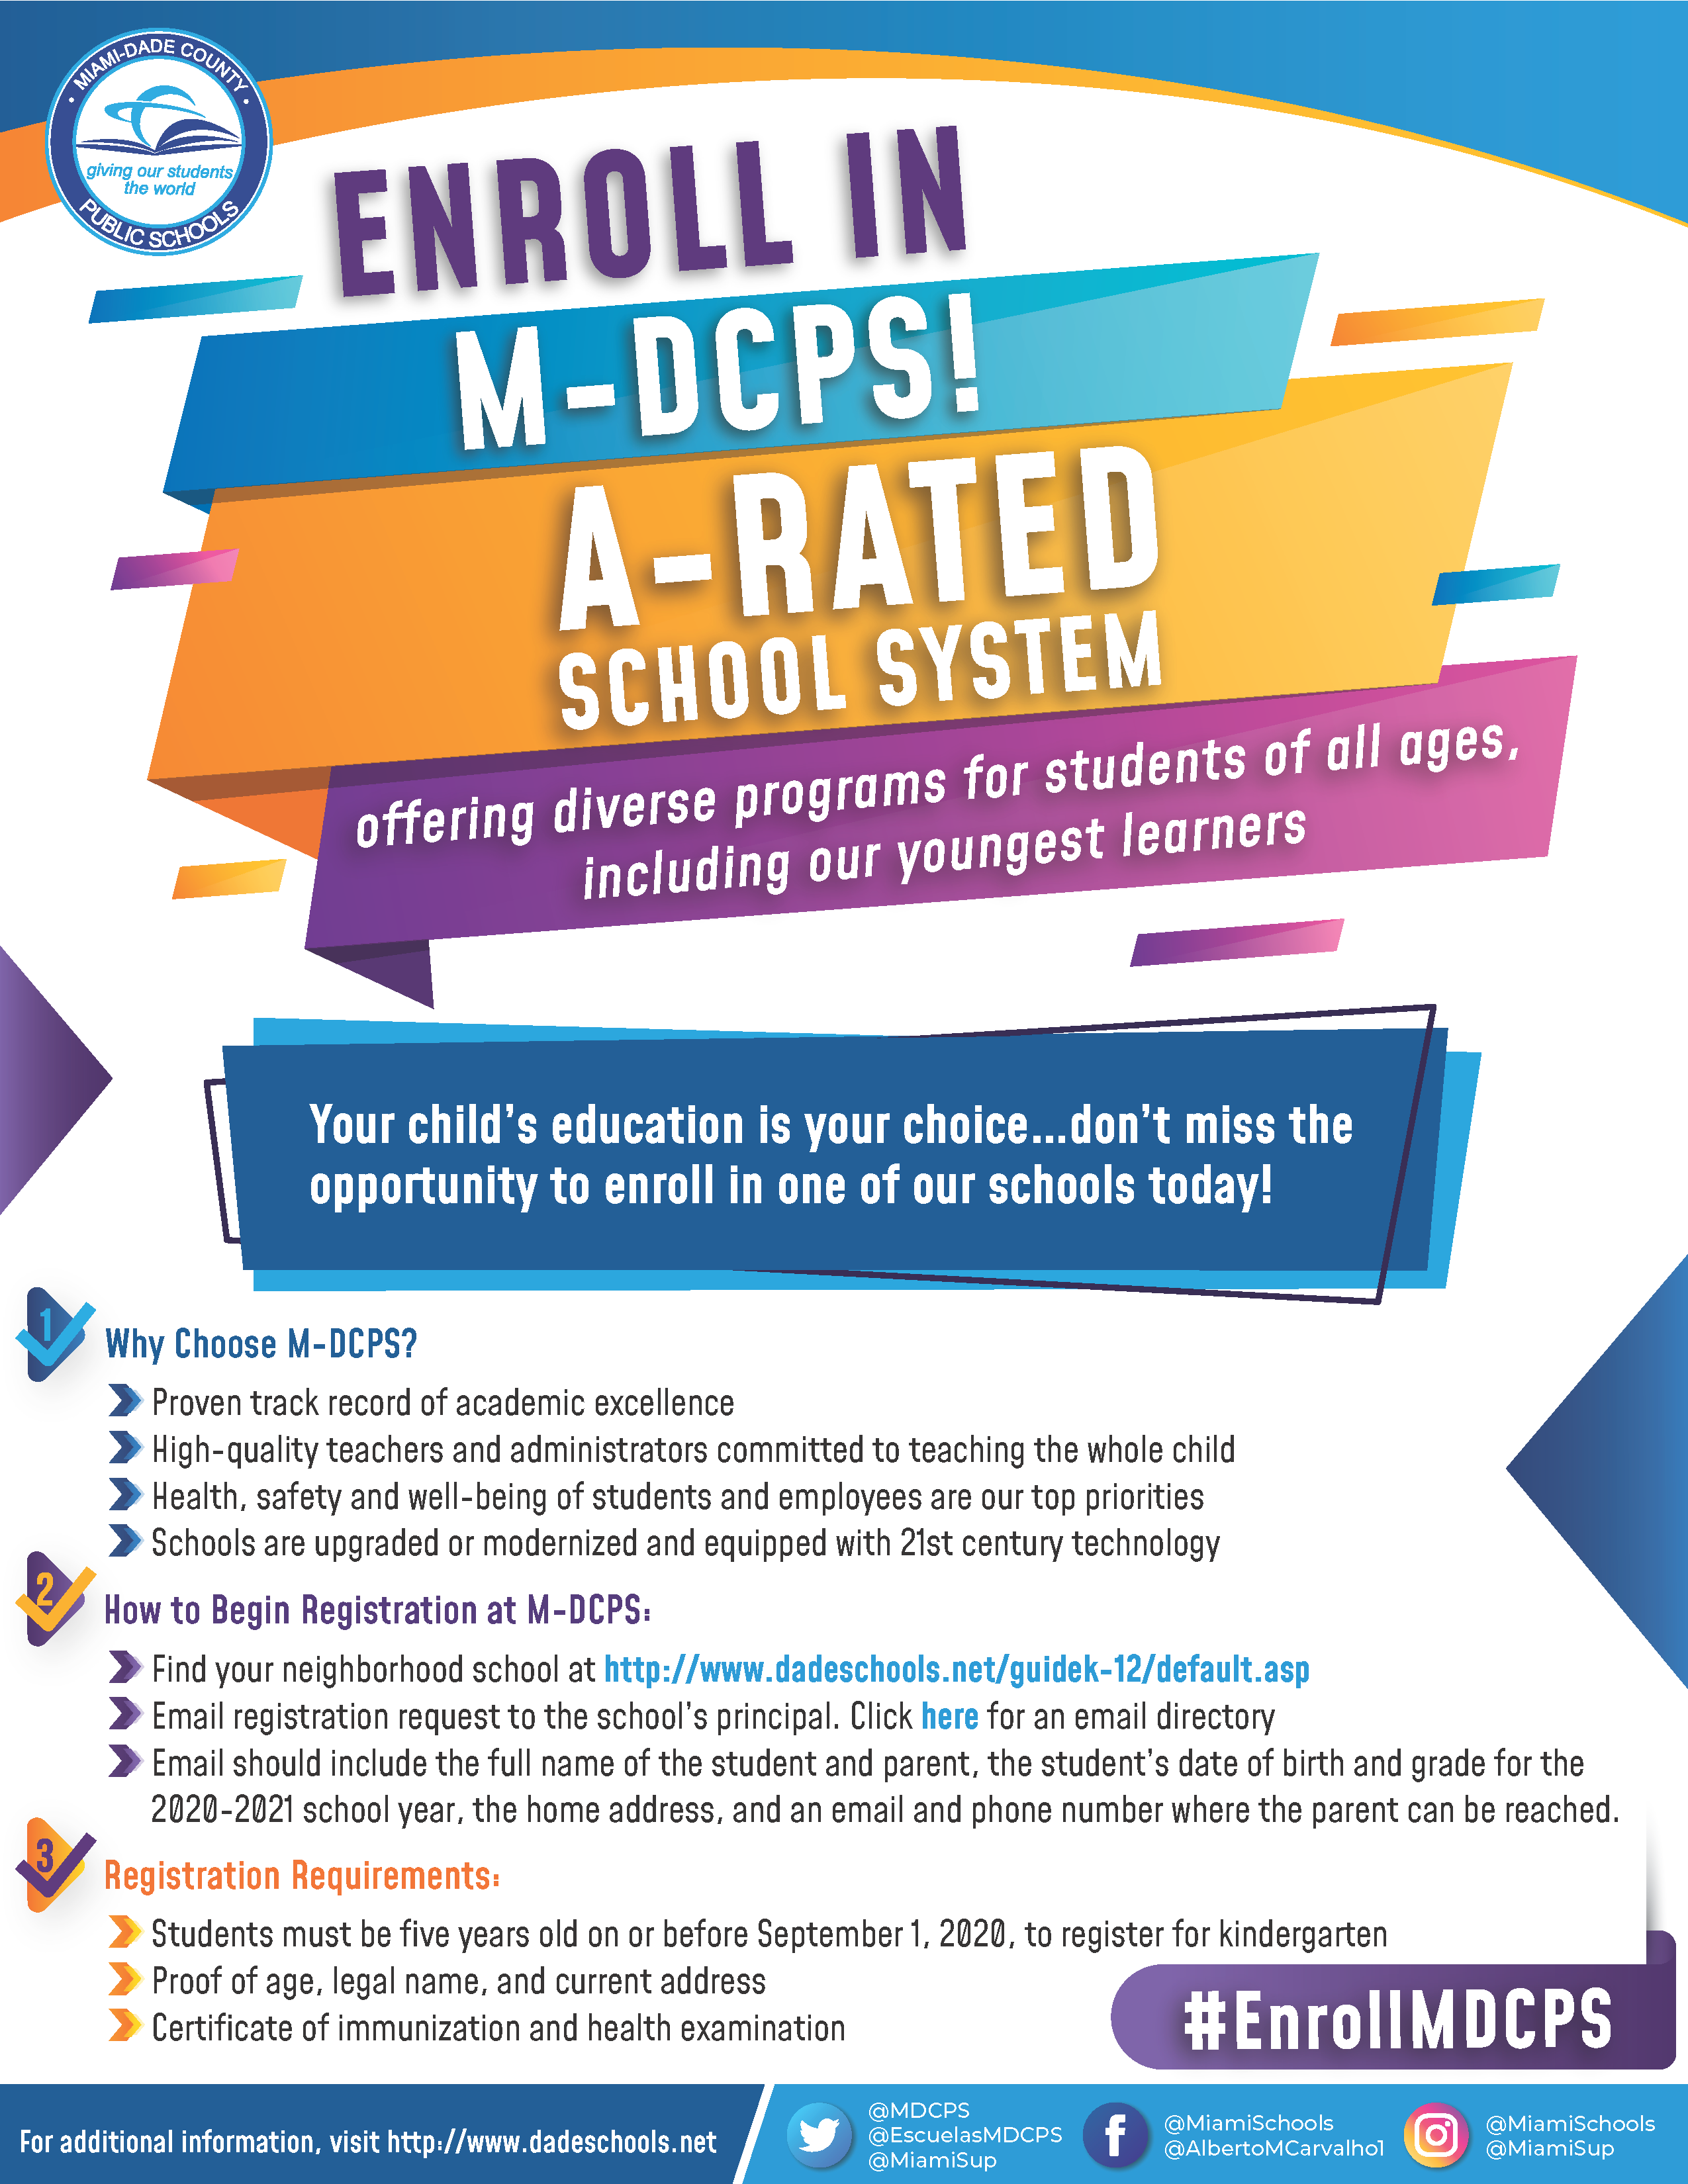 Enroll in M-DCPS Day Flyer